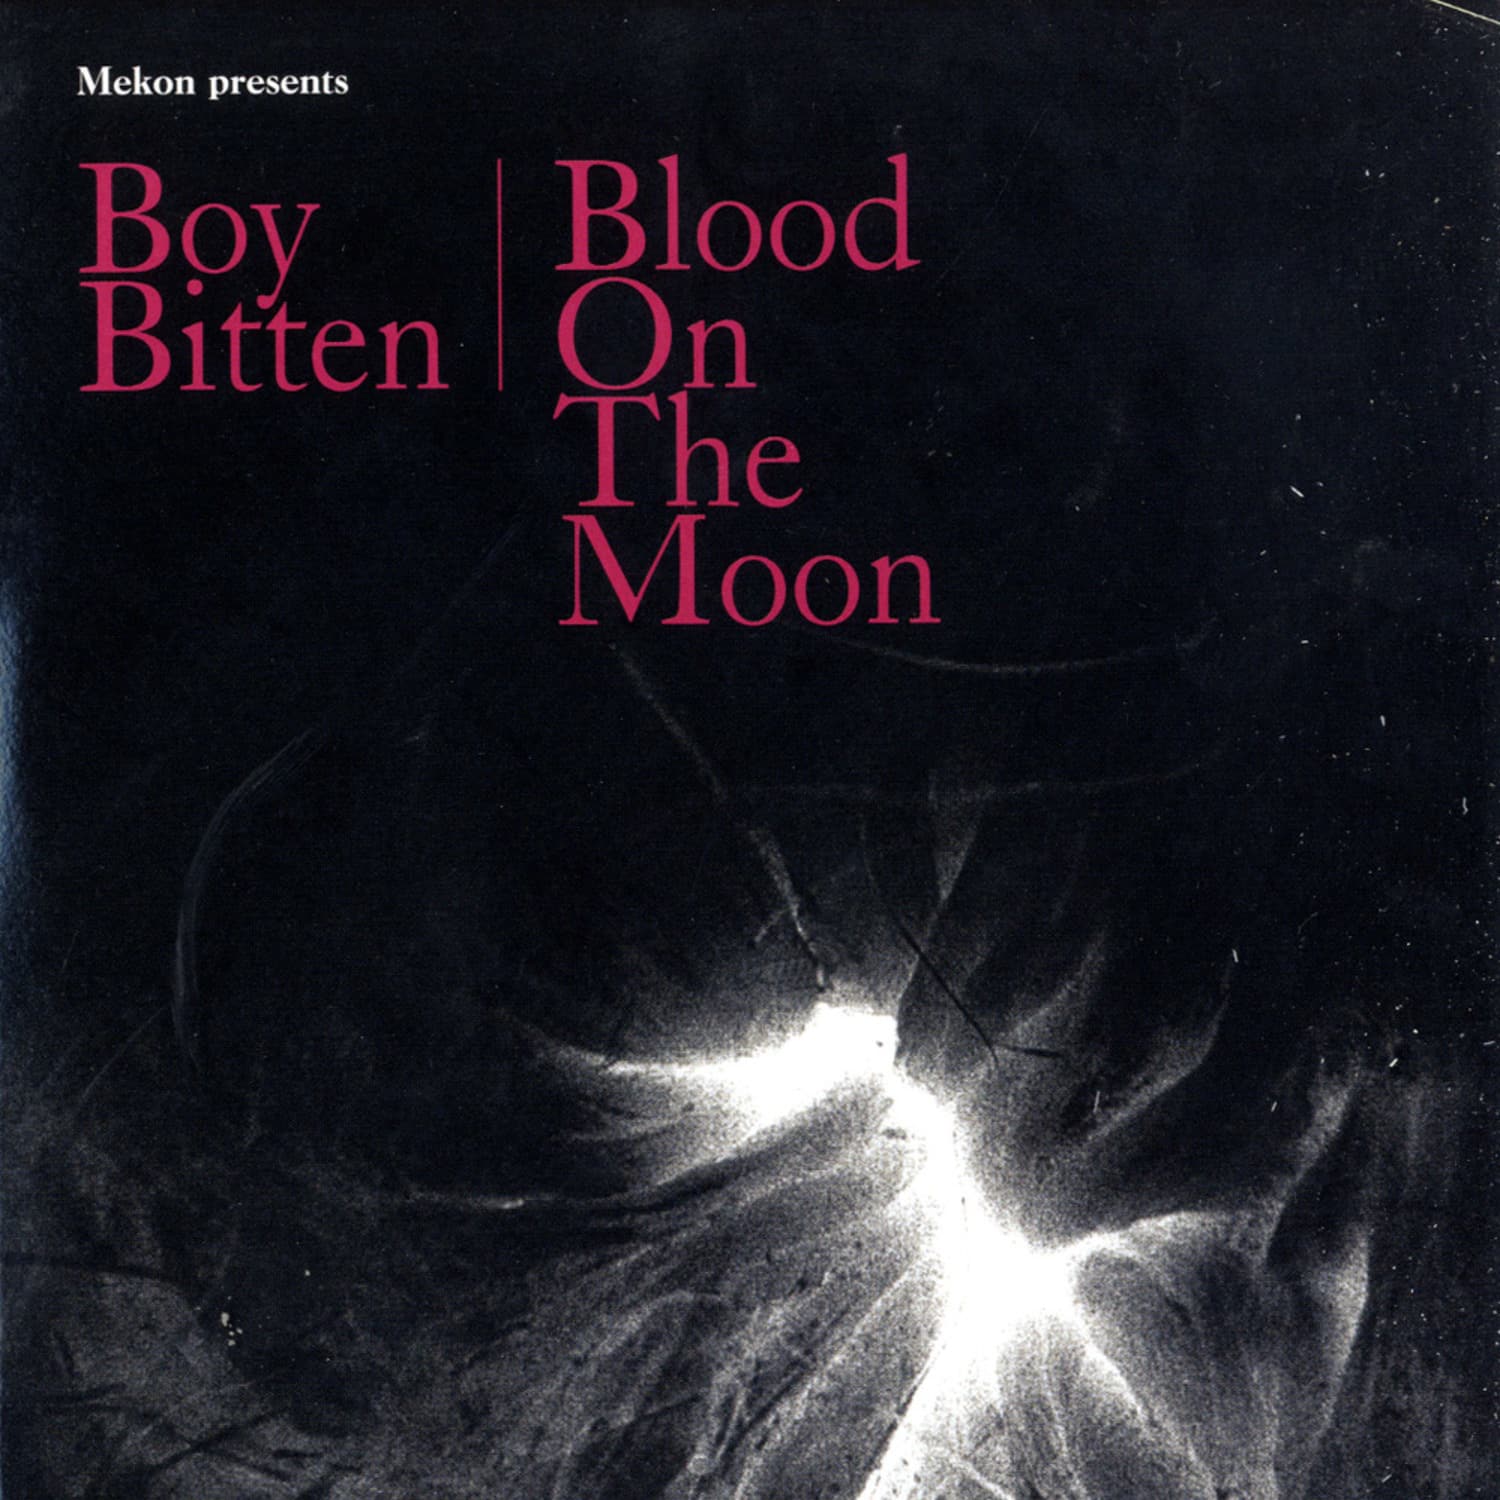 Mekon presents Boy Bitten - BLOOD ON THE MOON 